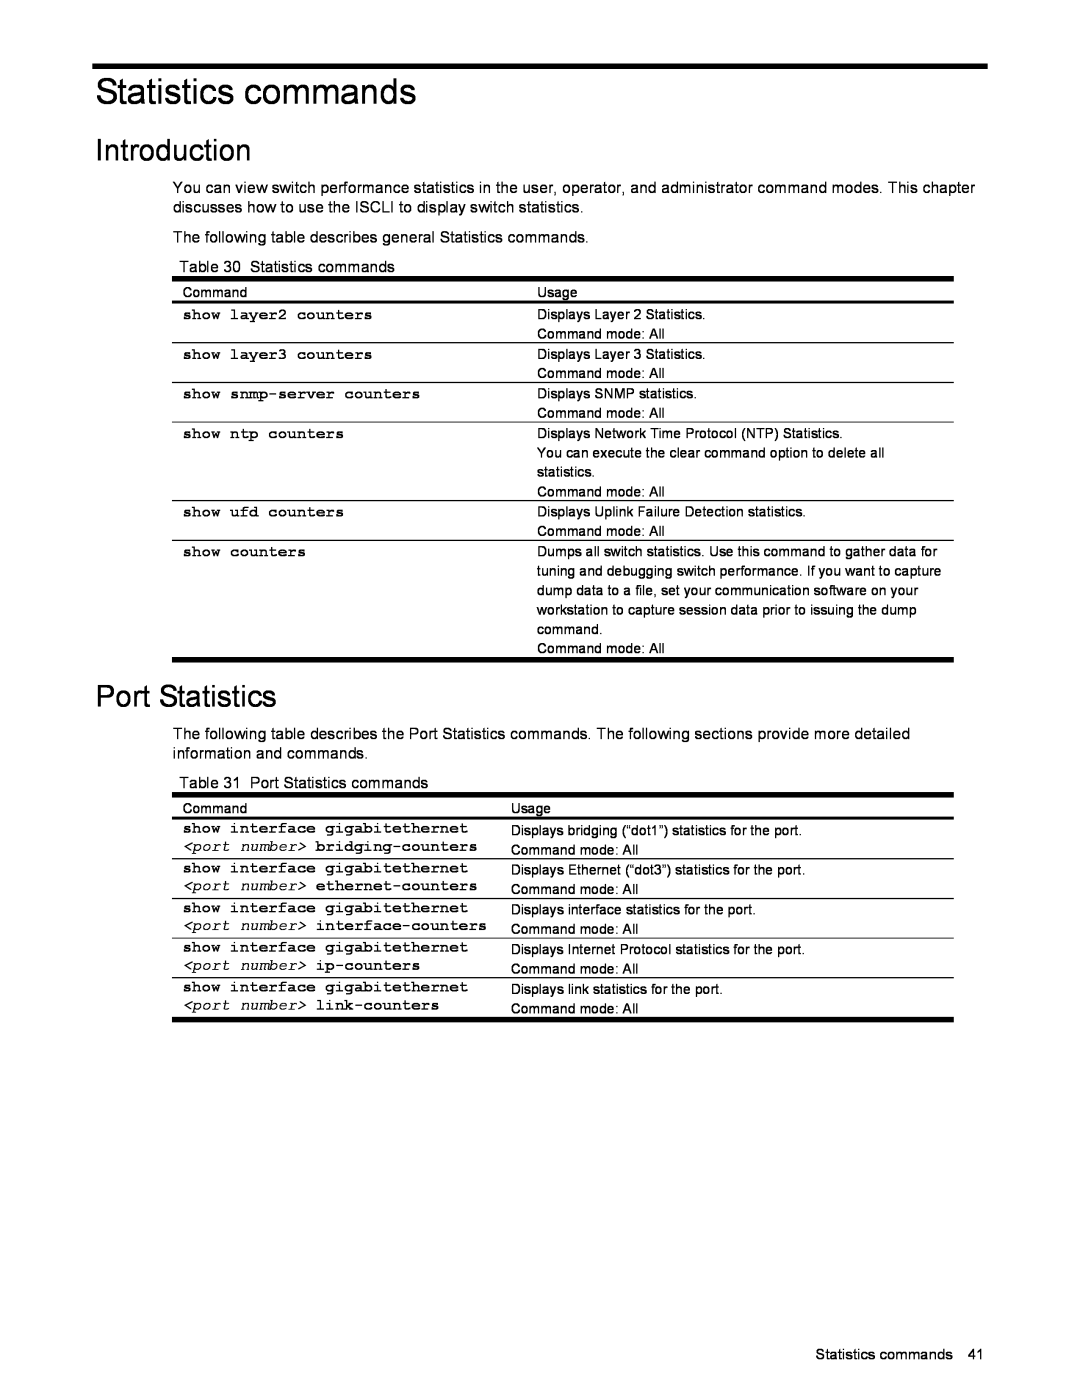 NEC N8406-022 Statistics commands, Port Statistics, Introduction, <port number> ip-counters, <port number> link-counters 